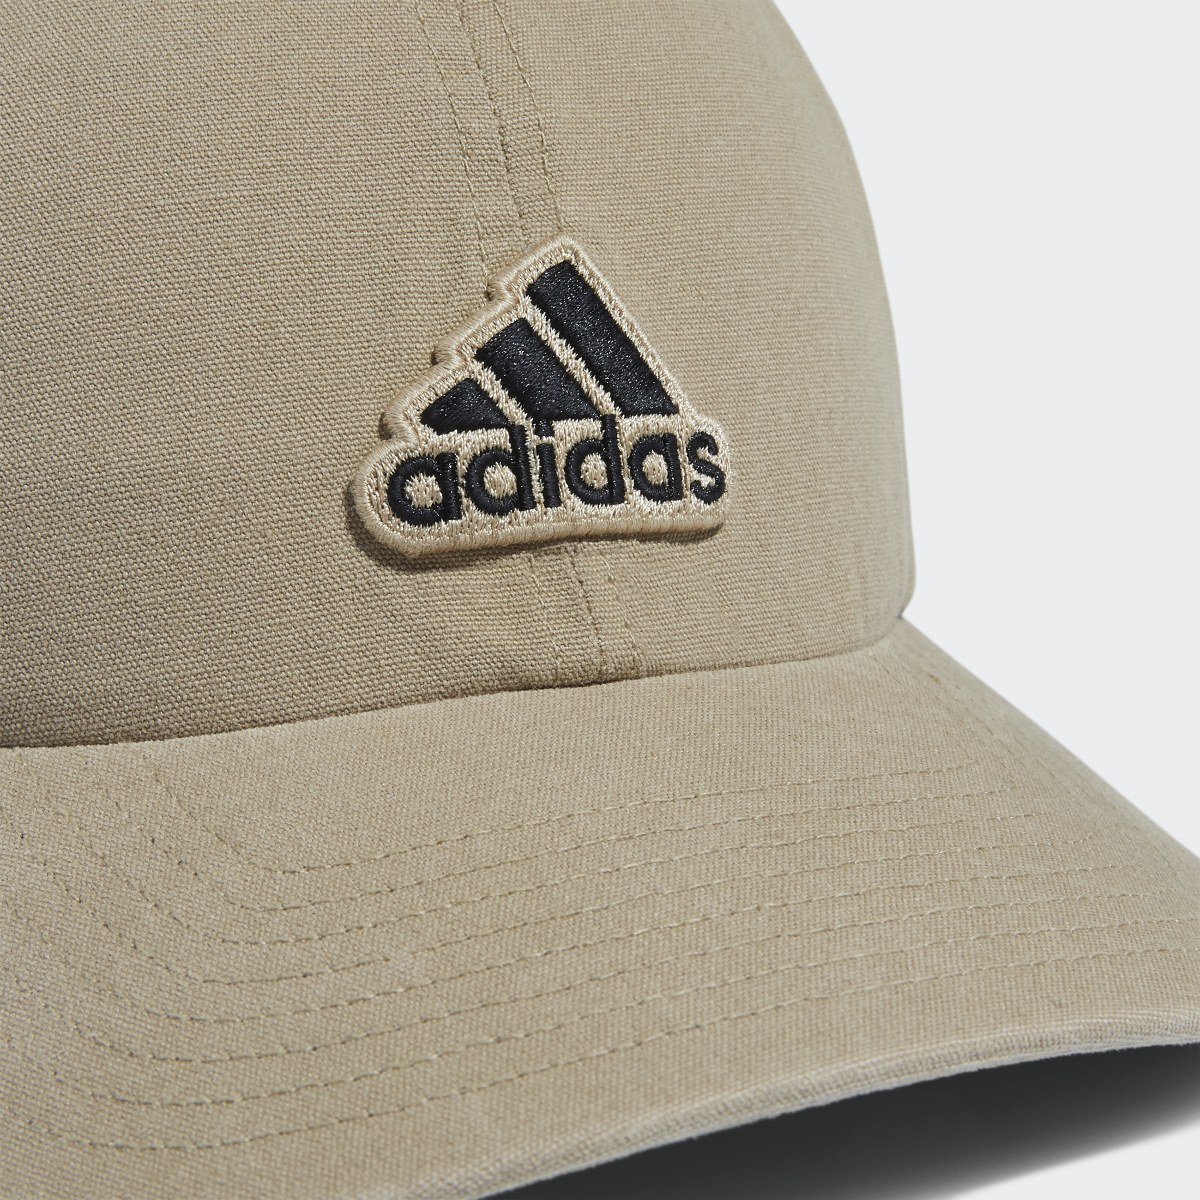 Adidas Ultimate Hat. 5